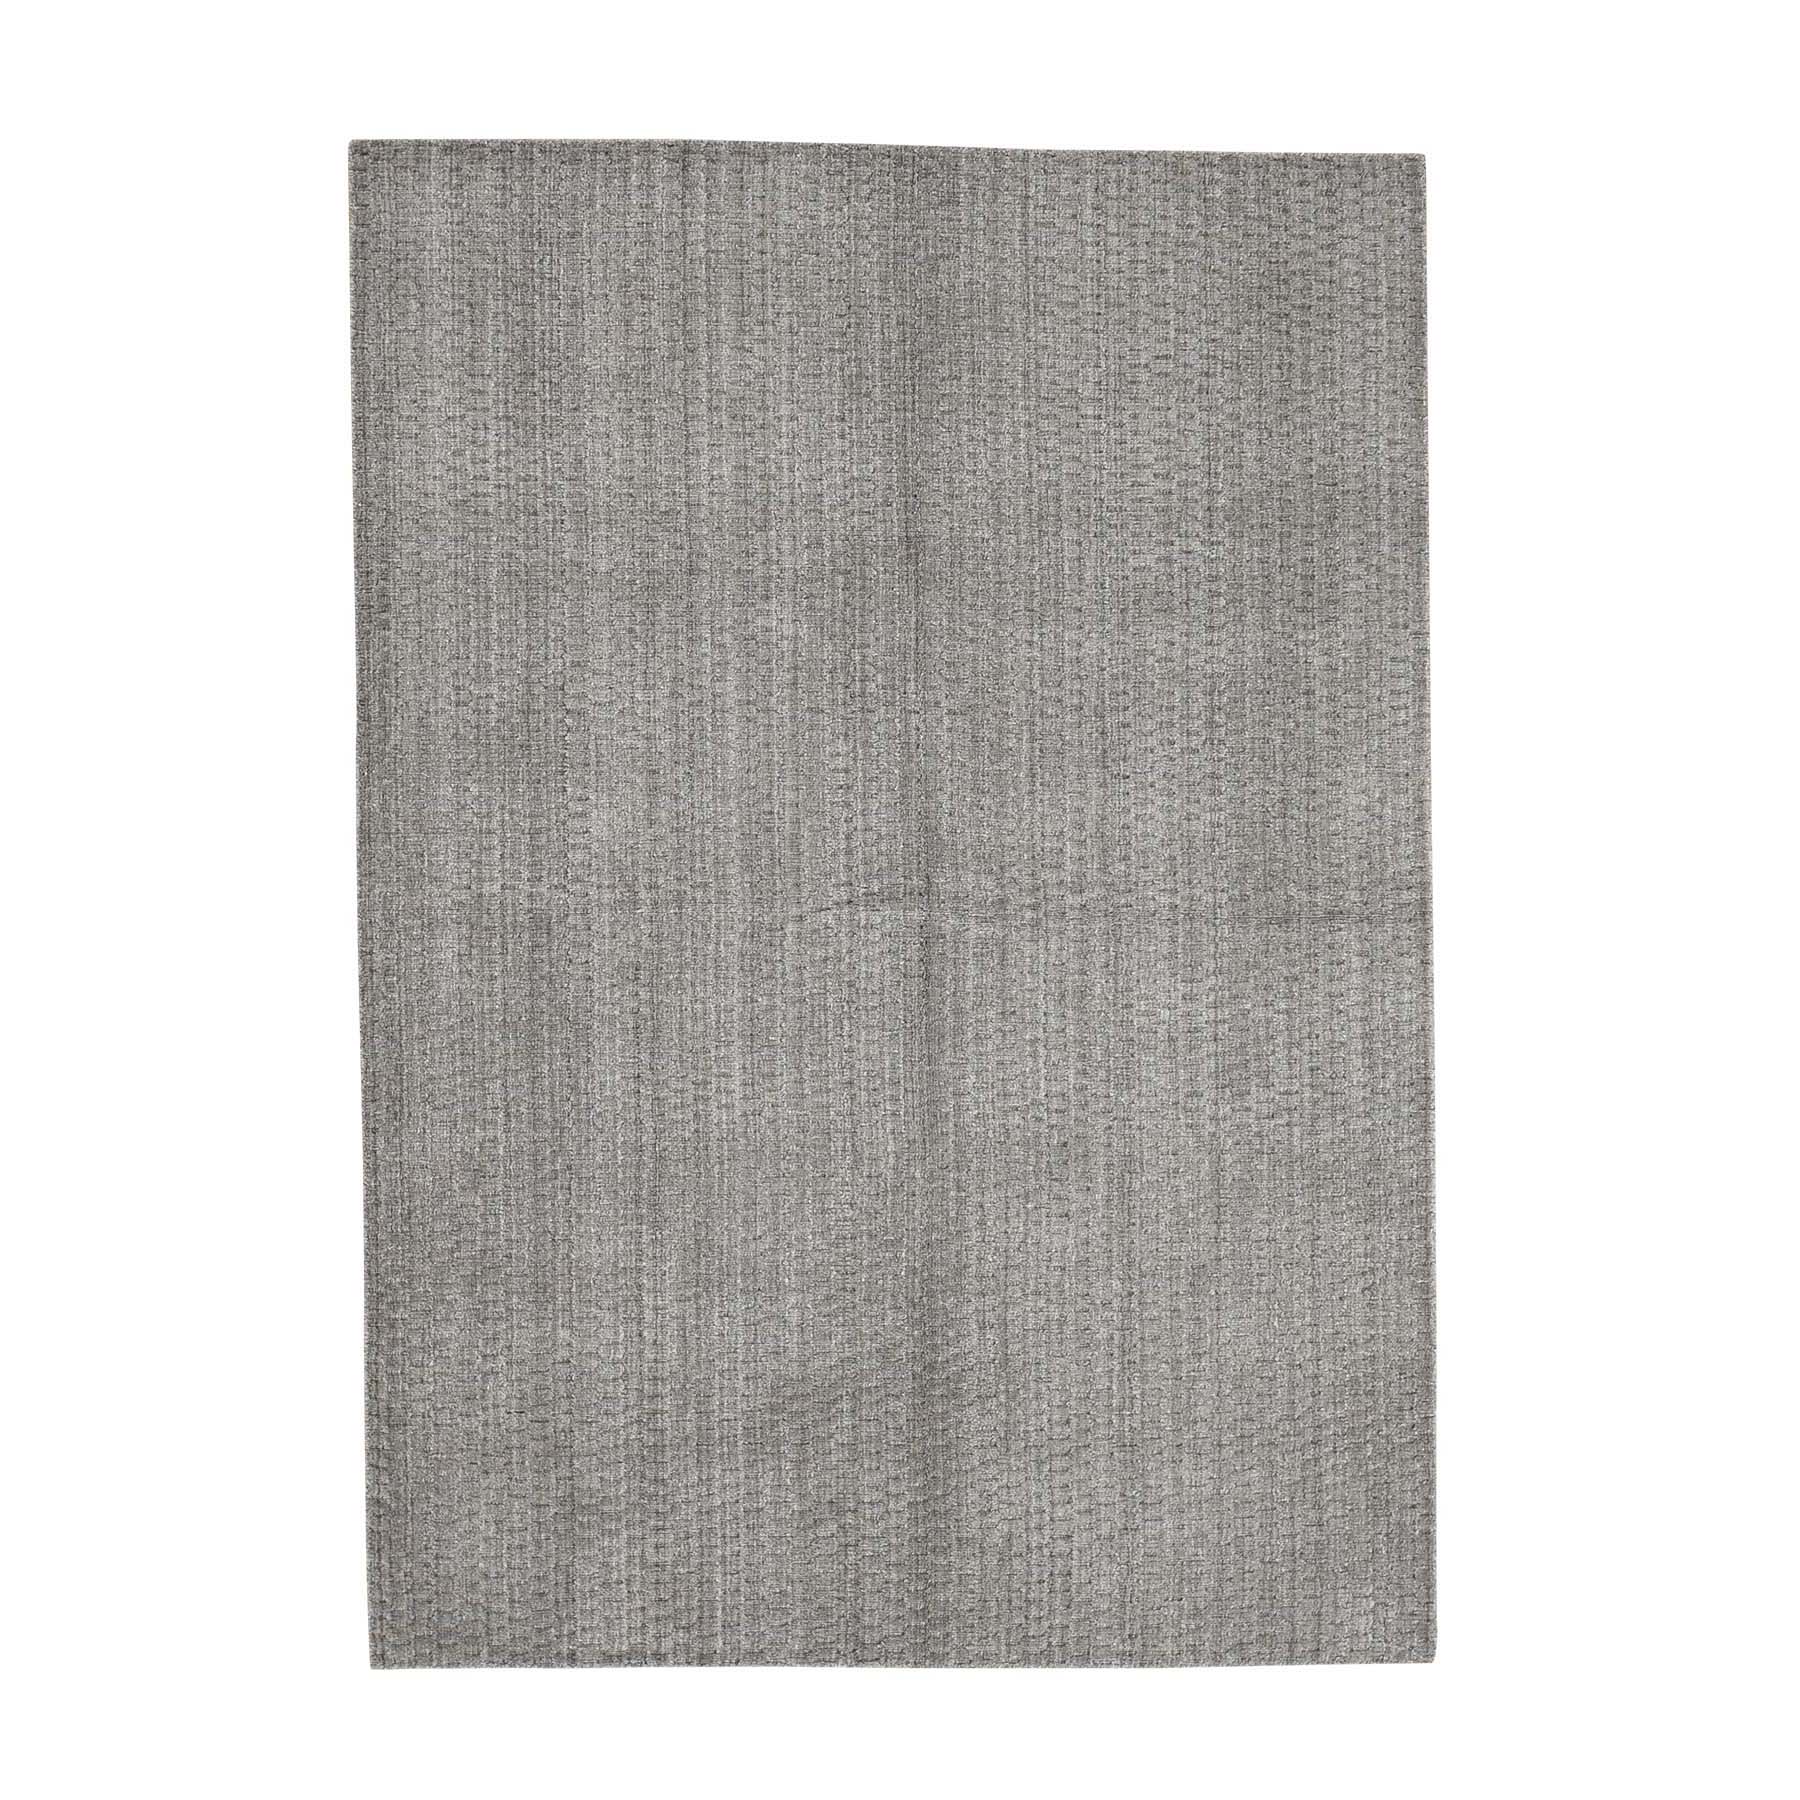 5'x7' Grey Pure Wool Tone on Tone Hand Loomed Oriental Rug 